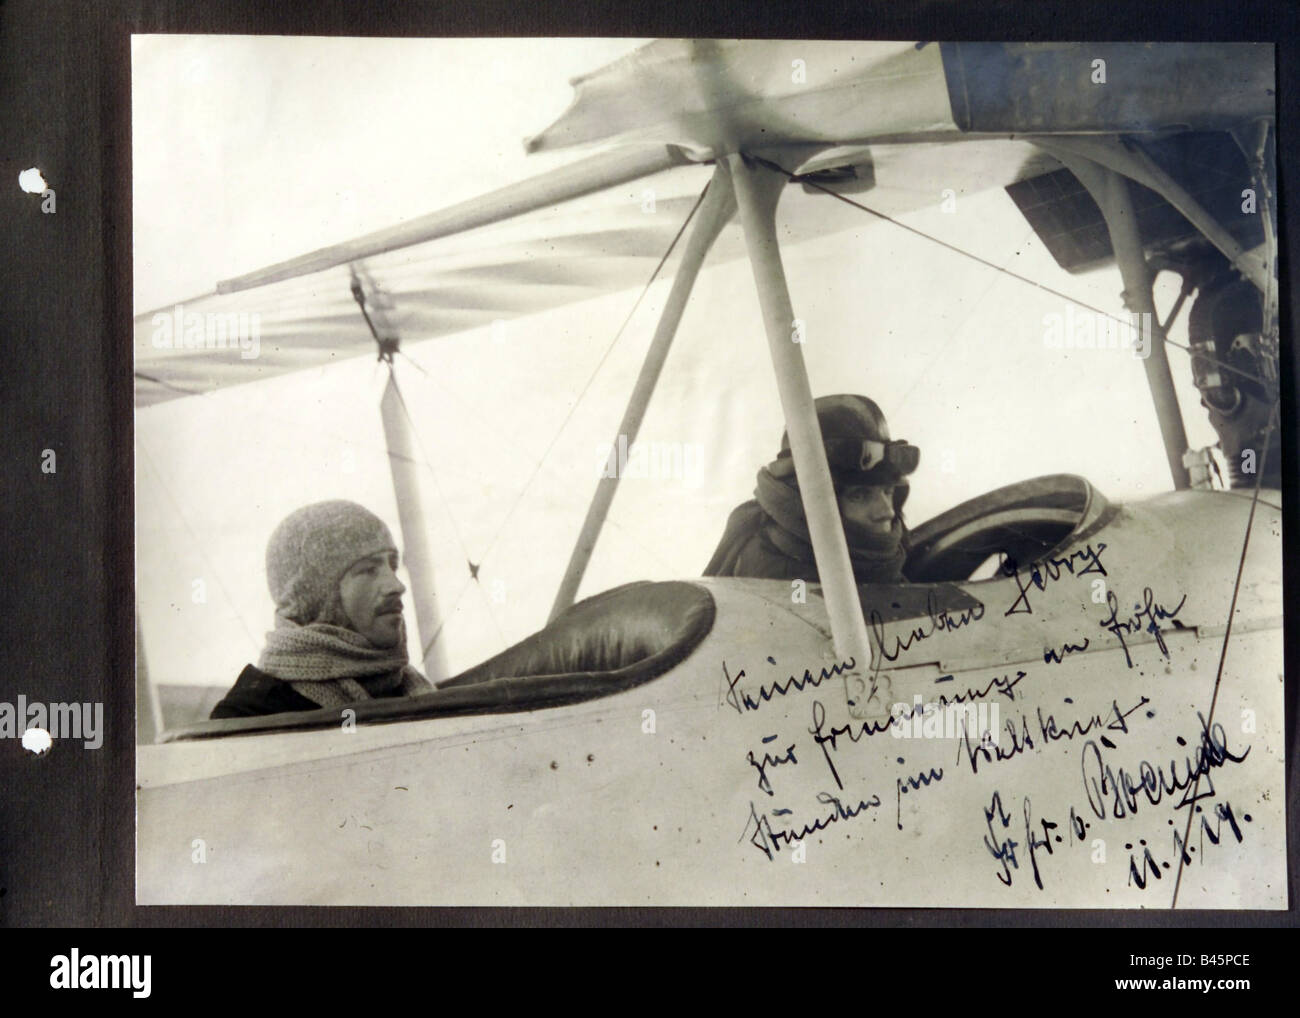 Boenigk, Oskar von, 25.8.1893 - 30.1.1946, German aviator, in a airplane, photo dedication, 11.1.1919, fighter pilot, First World War, WWI, officer, air force, Germany, 20th century, , Stock Photo